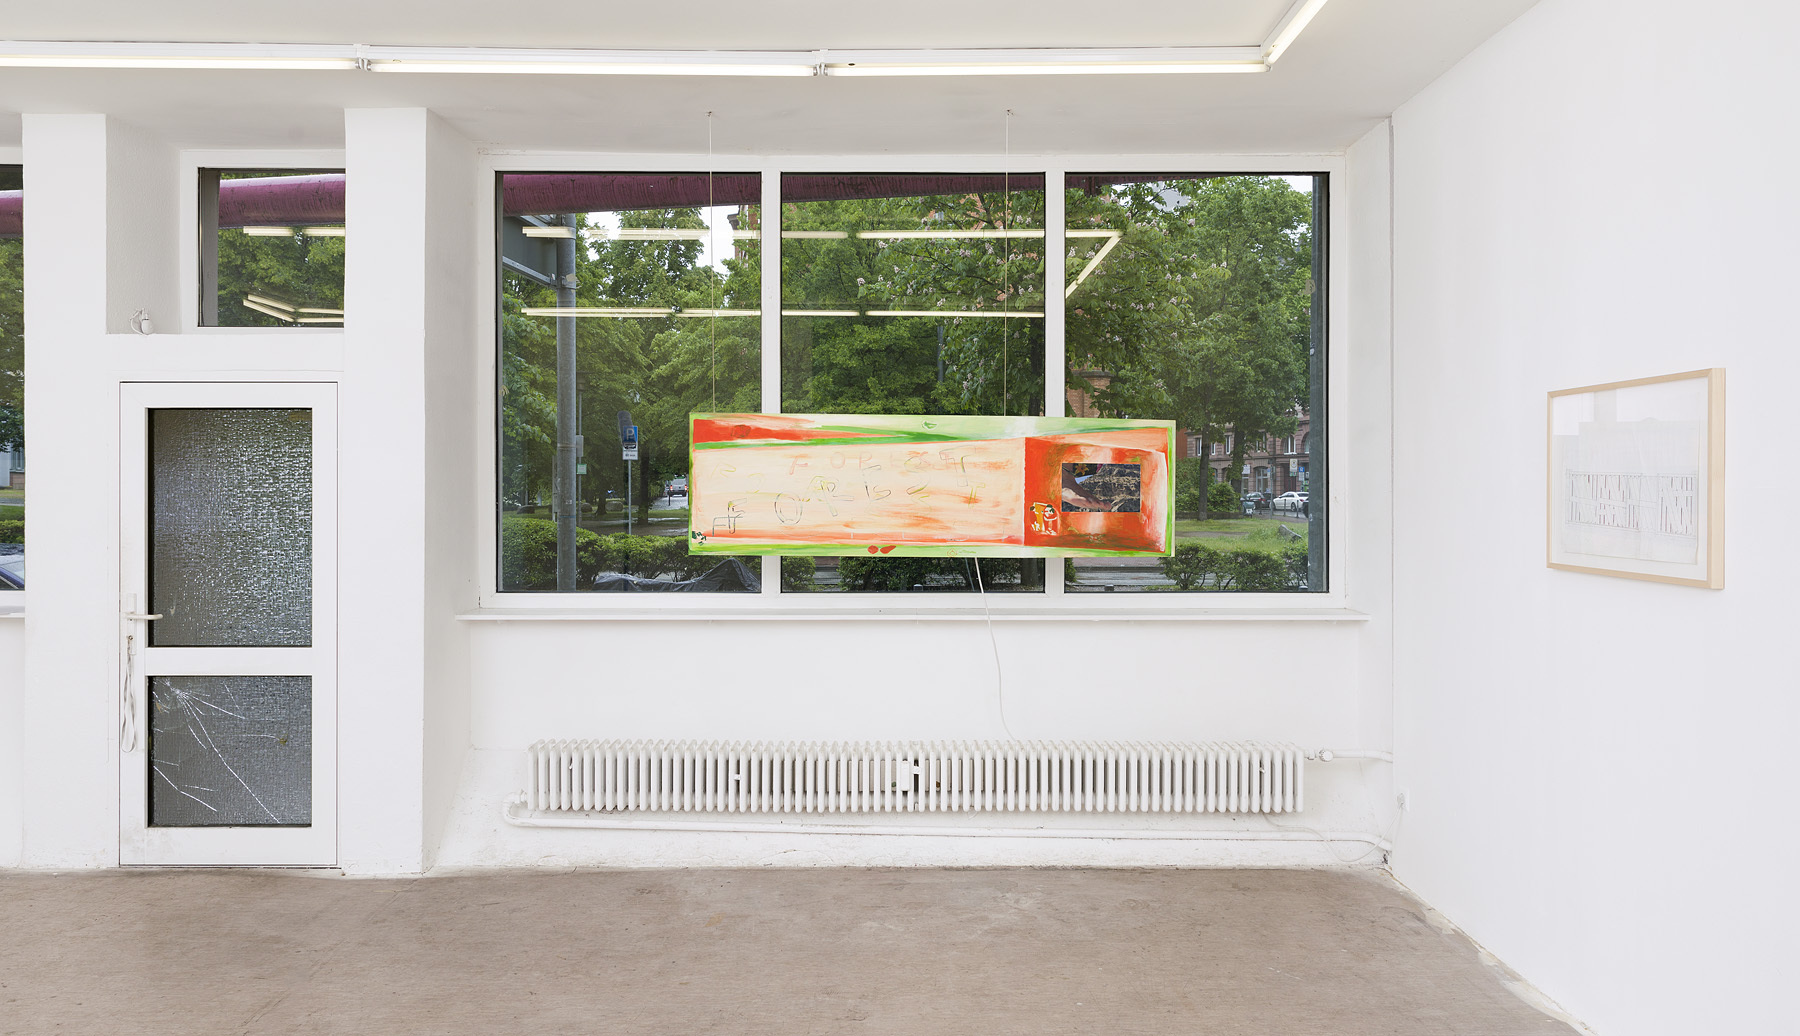 Installation view, Stella Sieber, Euphrat 4, 2018-2021, acrylic on wood, LCD monitors, 55x195cm; James Sturkey, Untitled, 2019, pen and correction fluid on paper, 772,5x52,5cm.